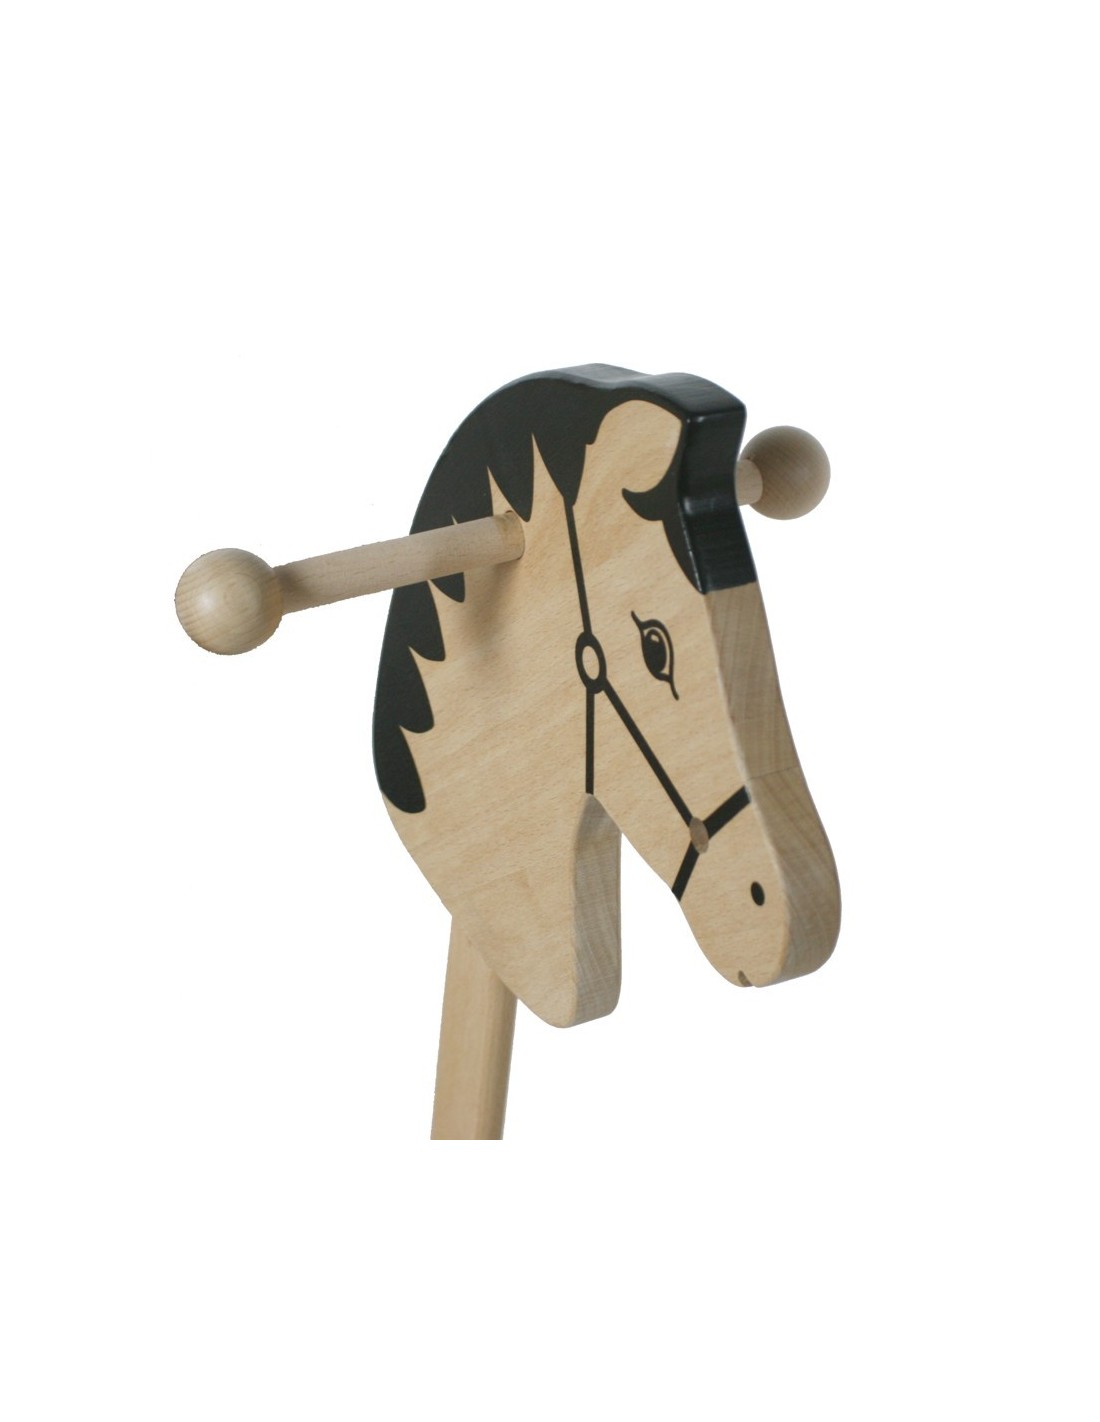 Caballito de palo de madera juguete tradicional infantil caballo palo